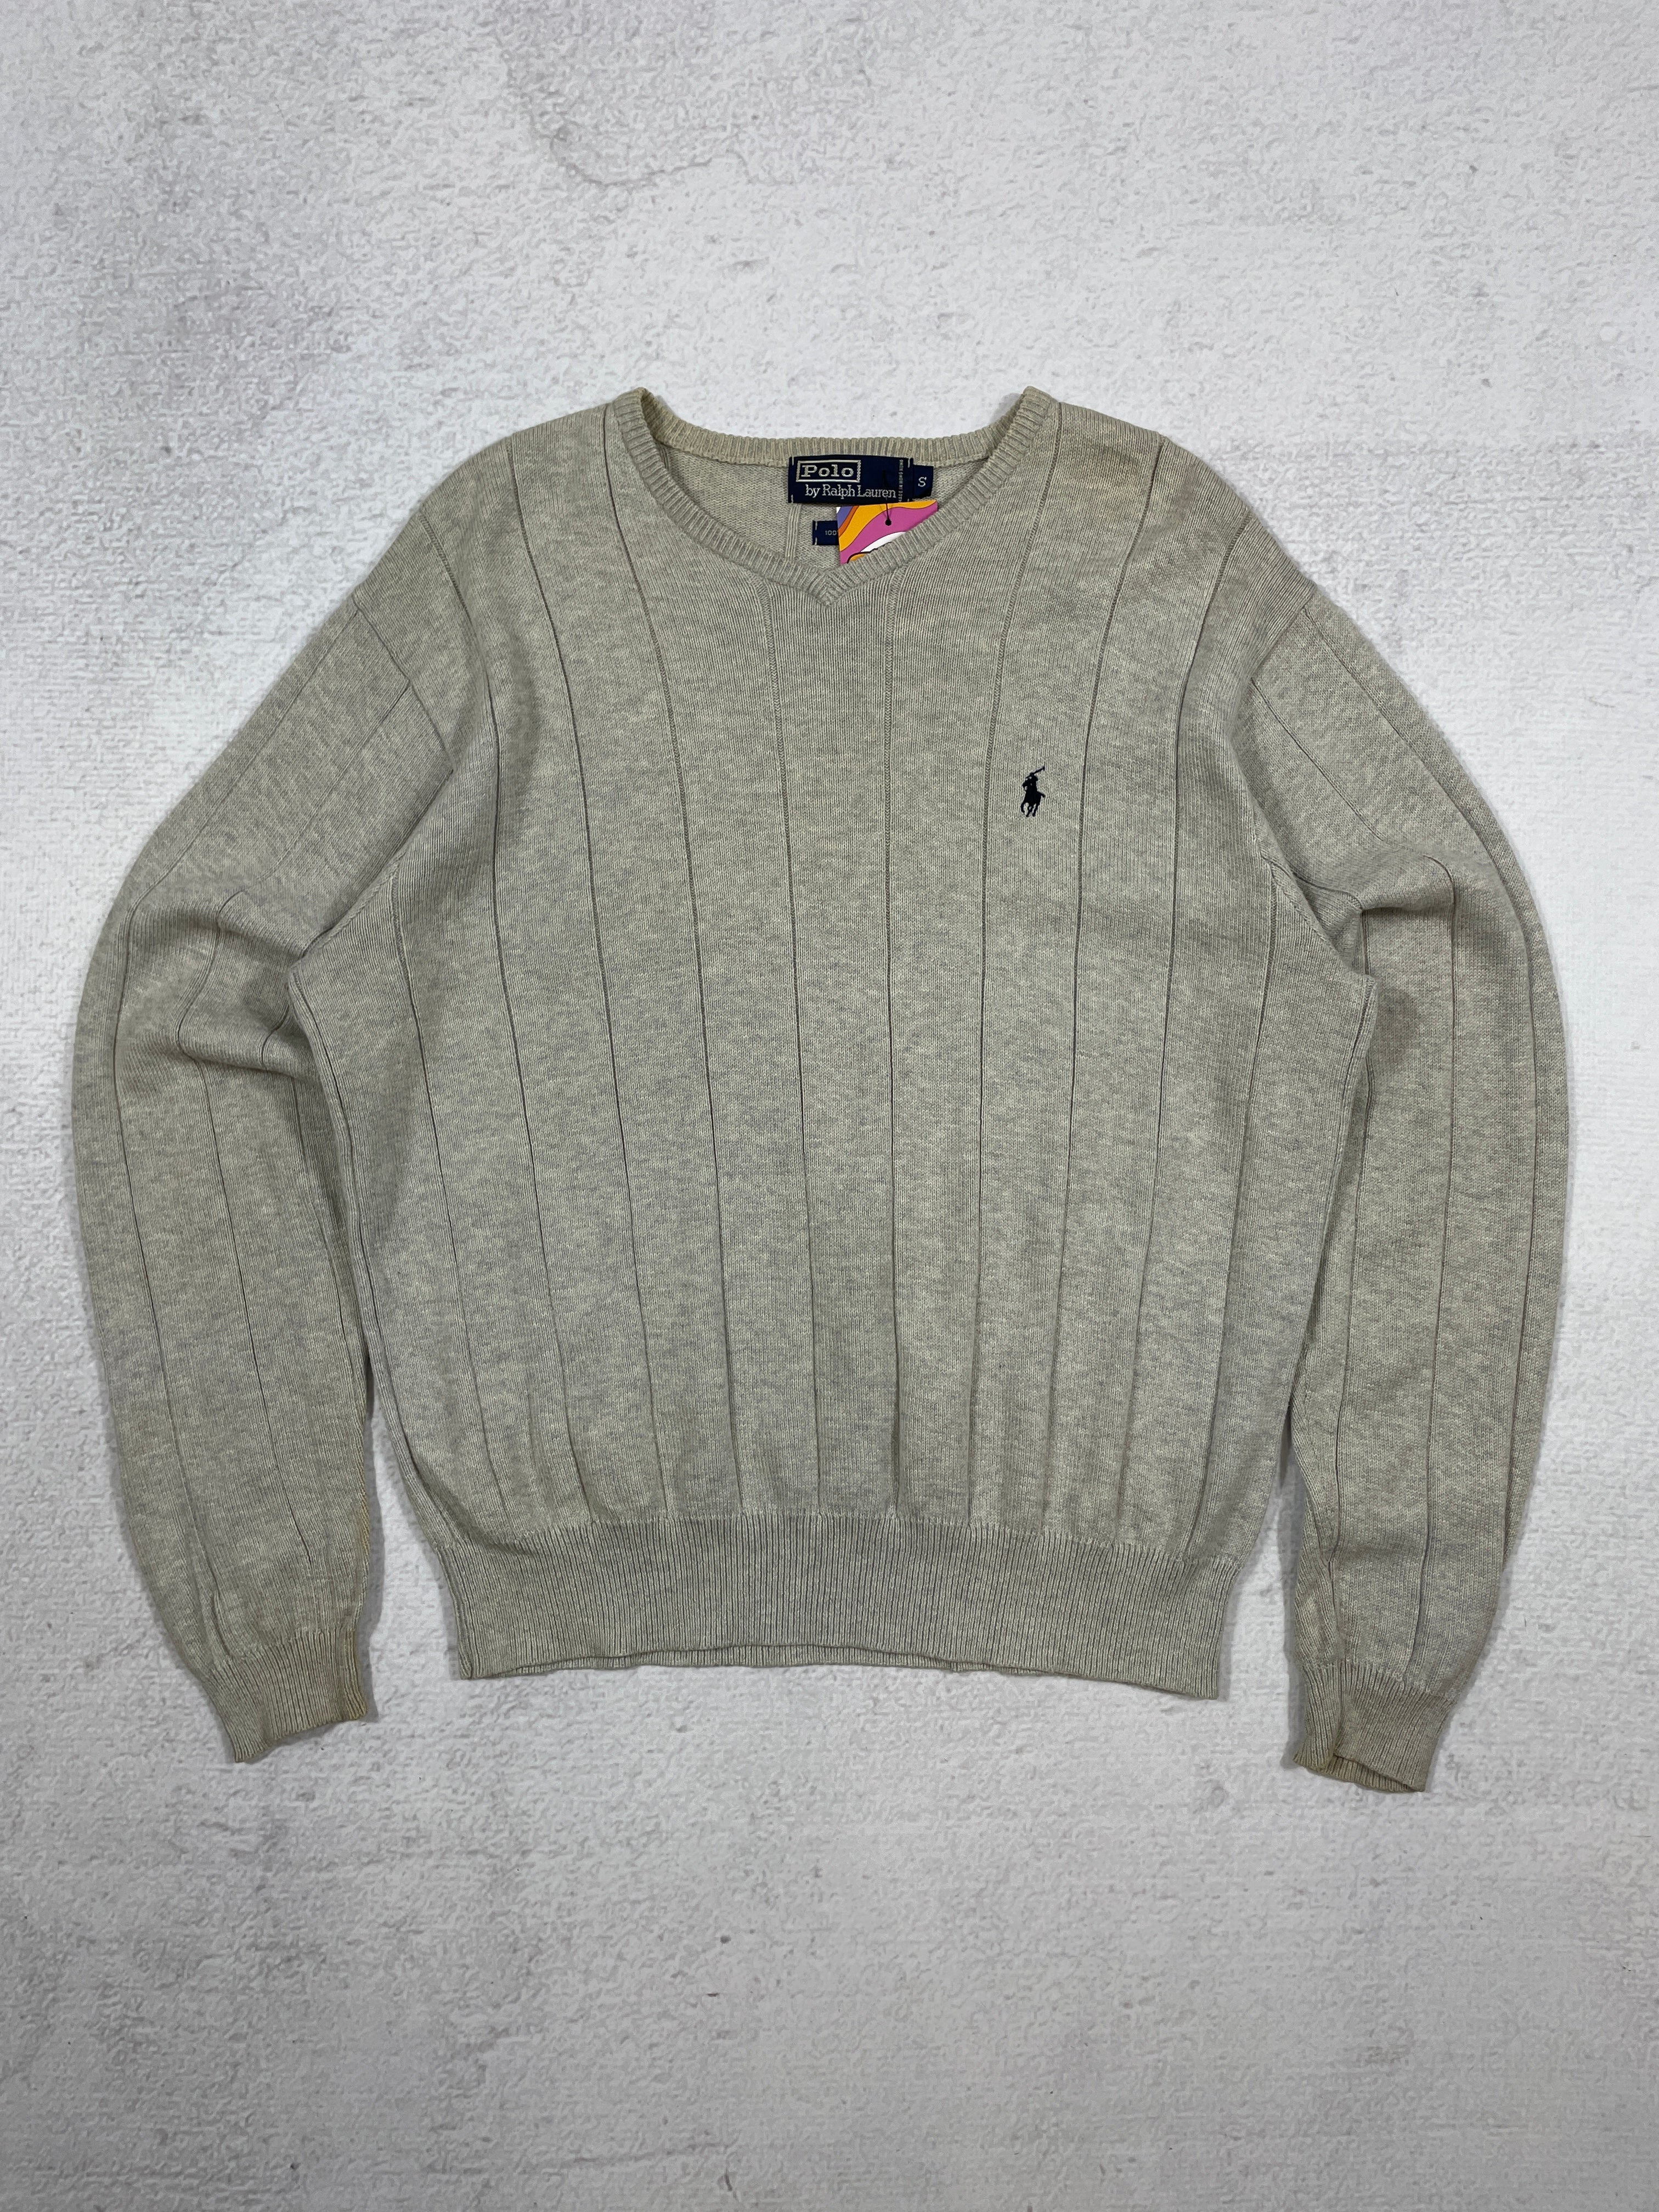 Vintage Polo Ralph Lauren Knit Sweater - Men's Small